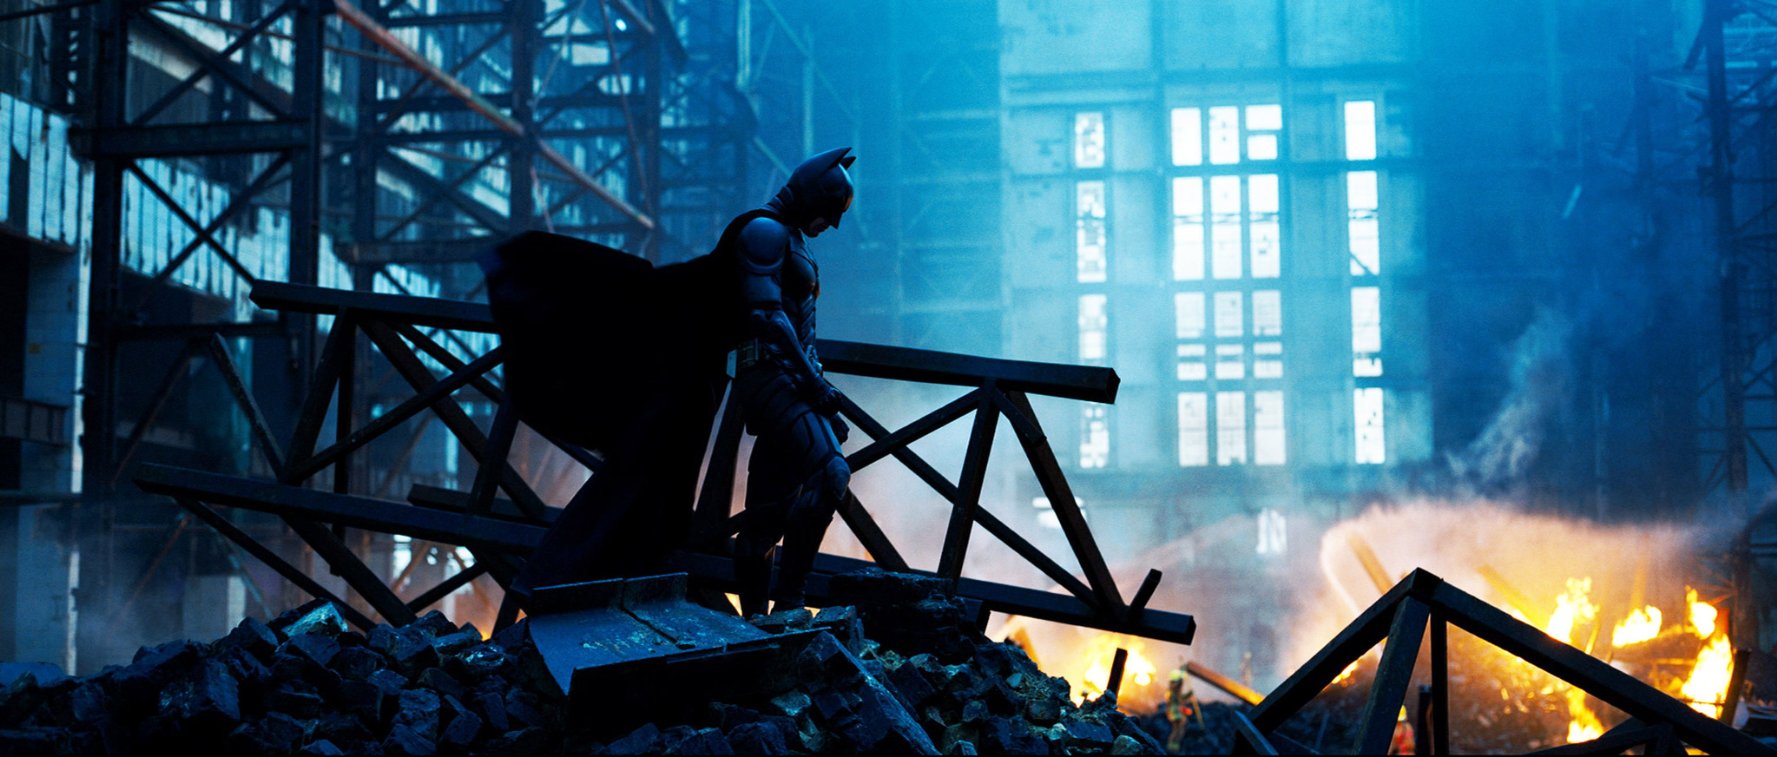 Batman, Christian Bale, The Dark Knight